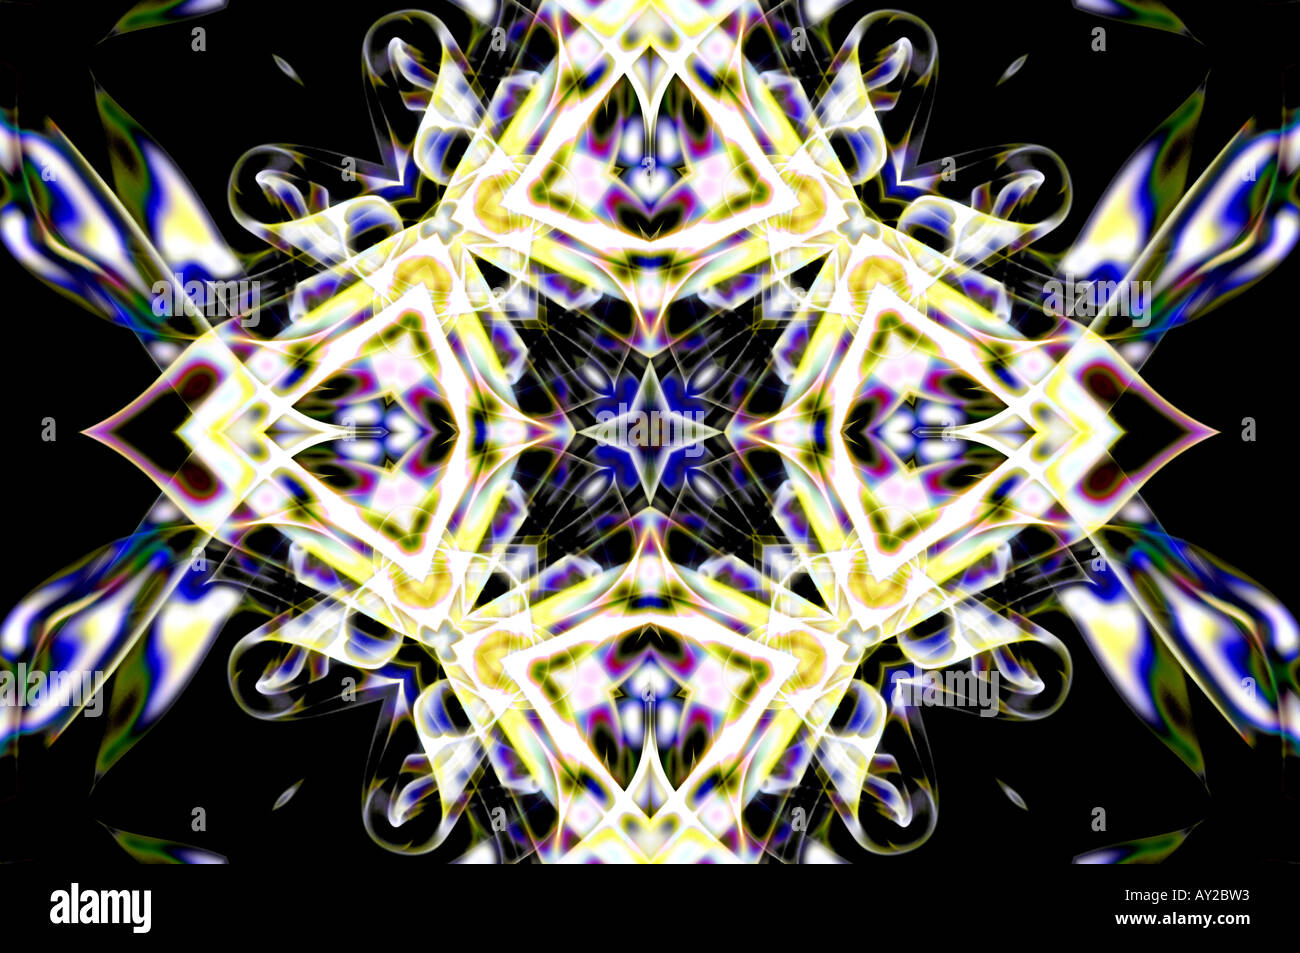 kaleidoscope kaleidoscopic art arty design pattern form structure motif ...